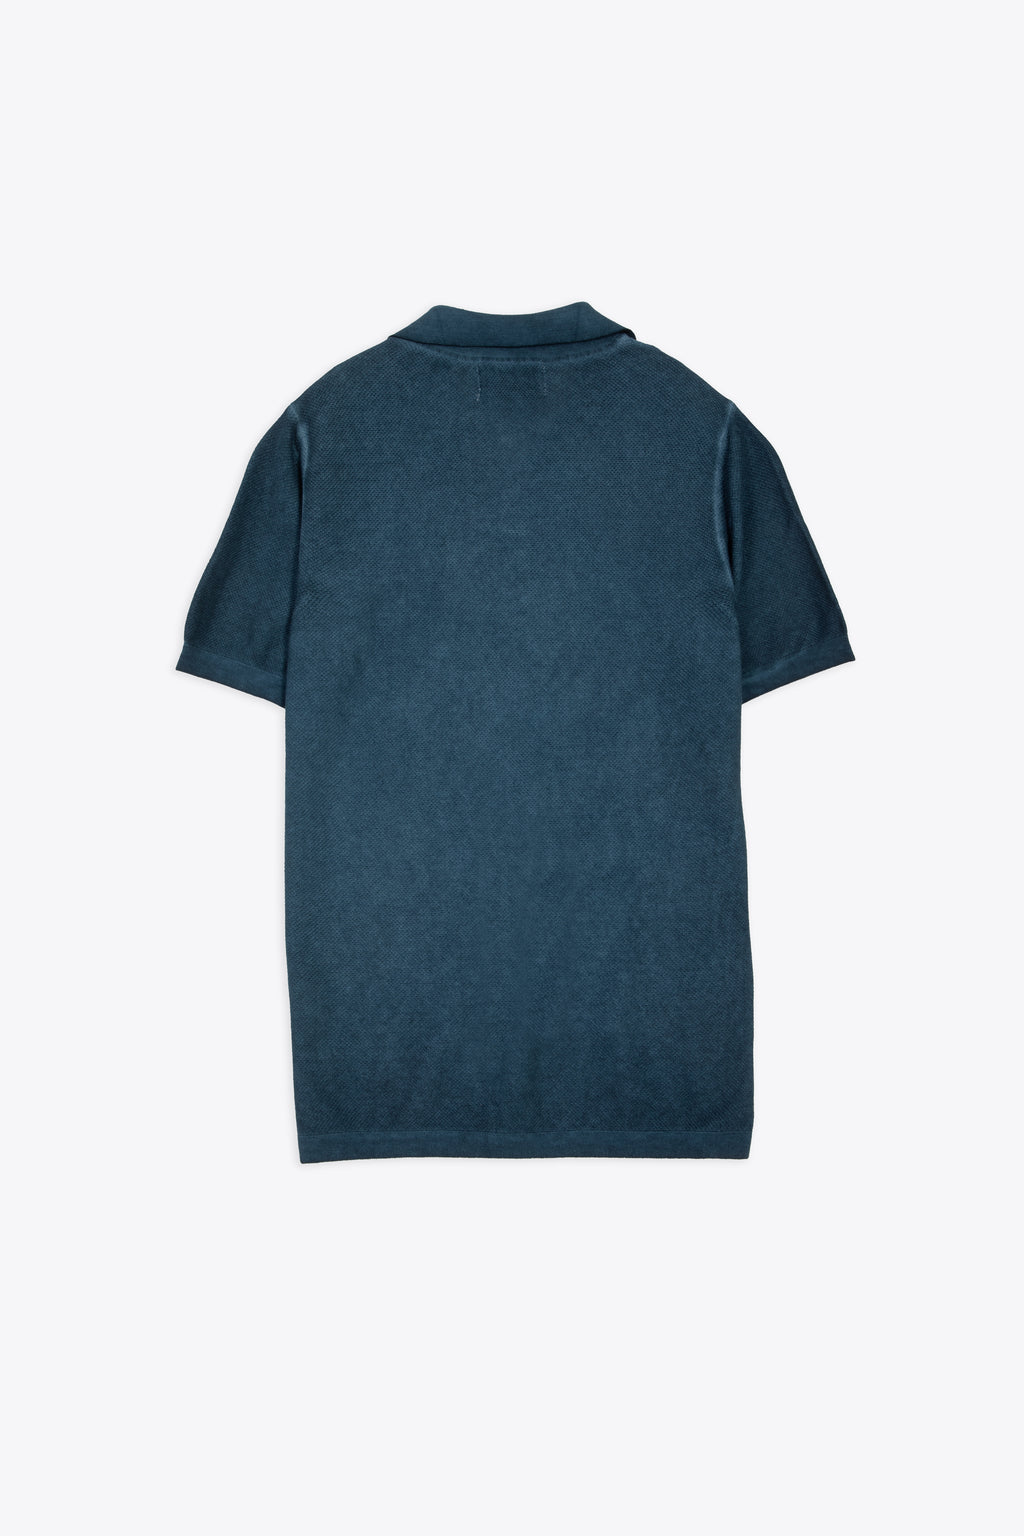 alt-image__Blue-moss-stitch-knitted-cotton-polo-shirt